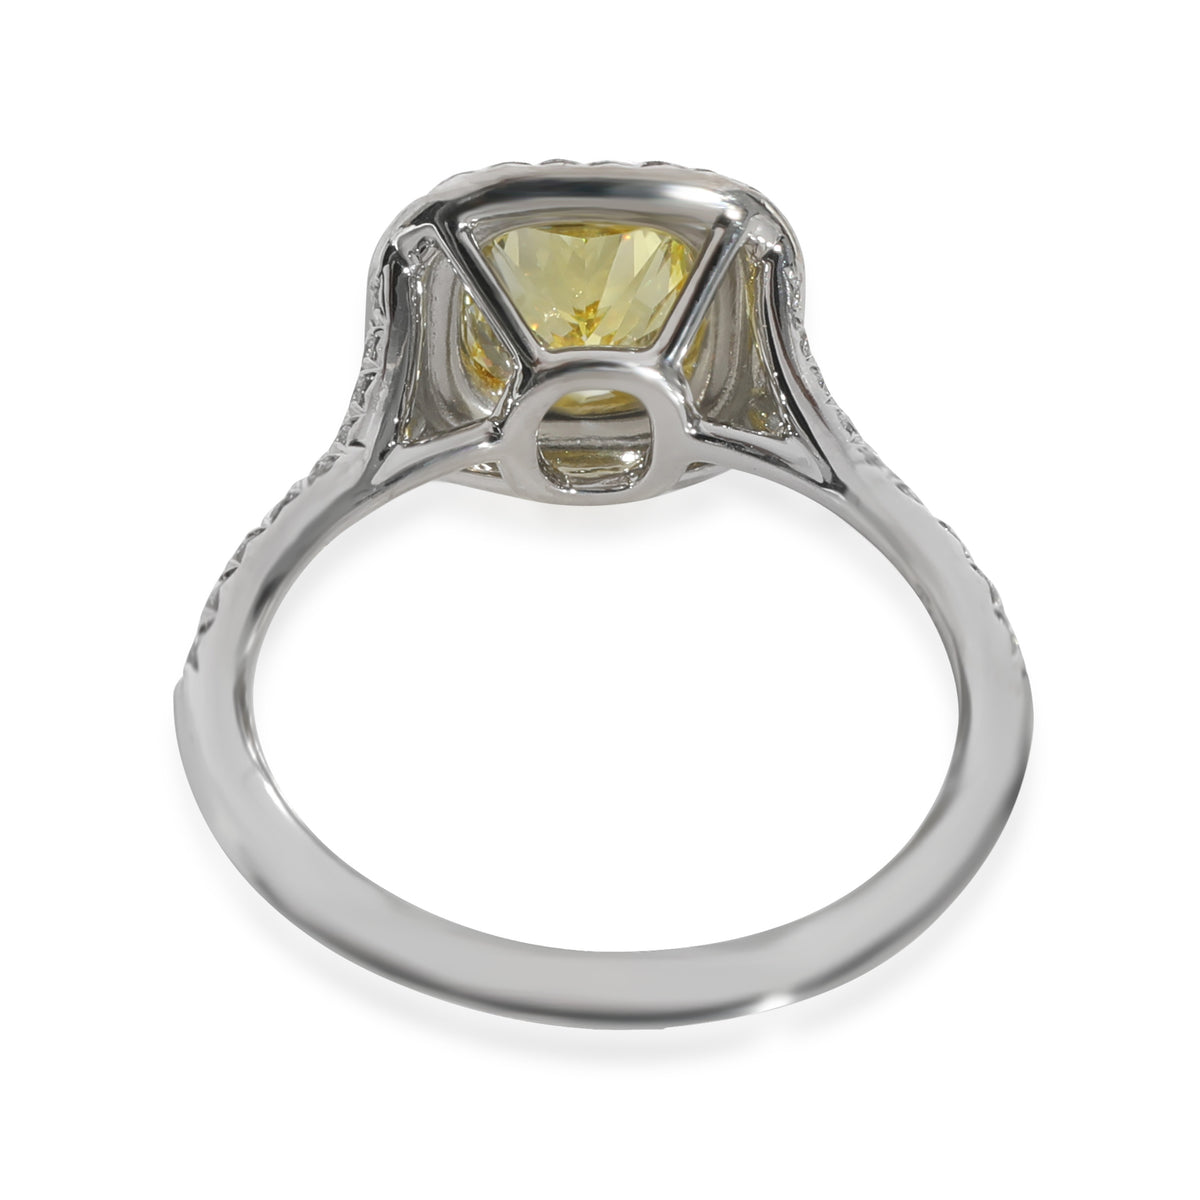 Soleste Yellow Diamond Engagement Ring in 18k Gold & Platinum 1.98